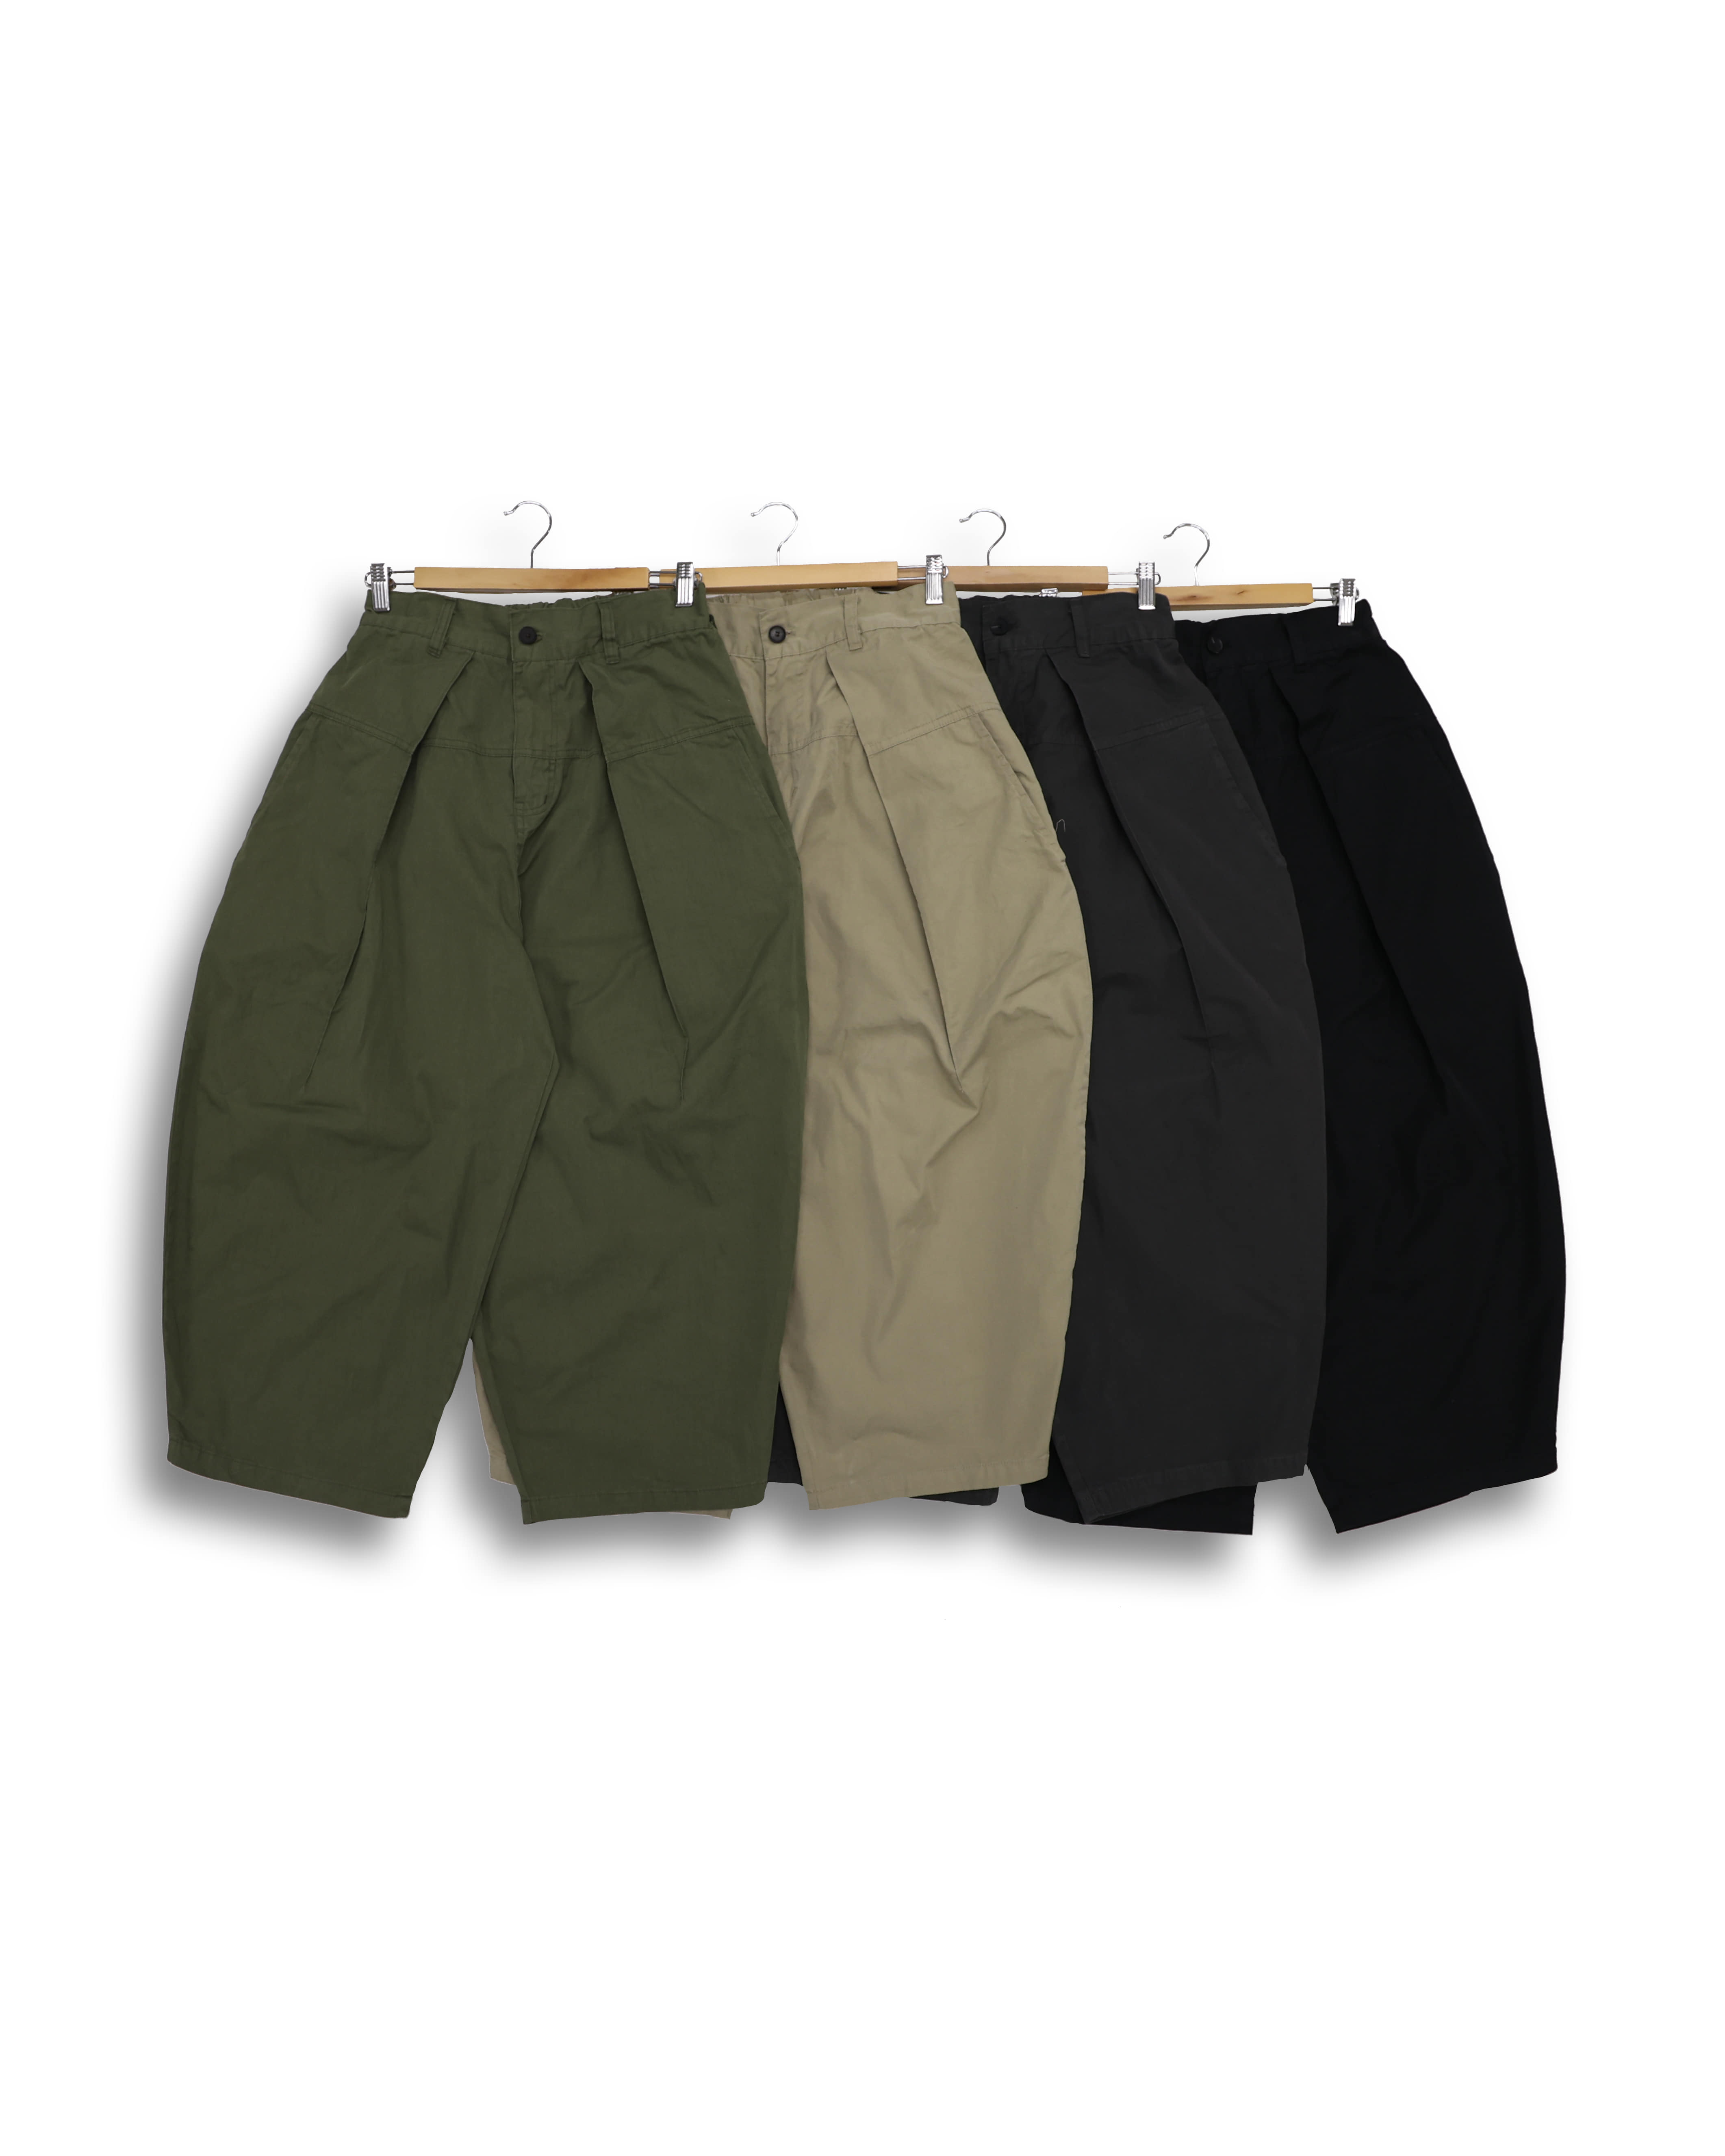 RAM Flap Tuck Crop Wide Pants (Black/Charcoal/Khaki/Beige)